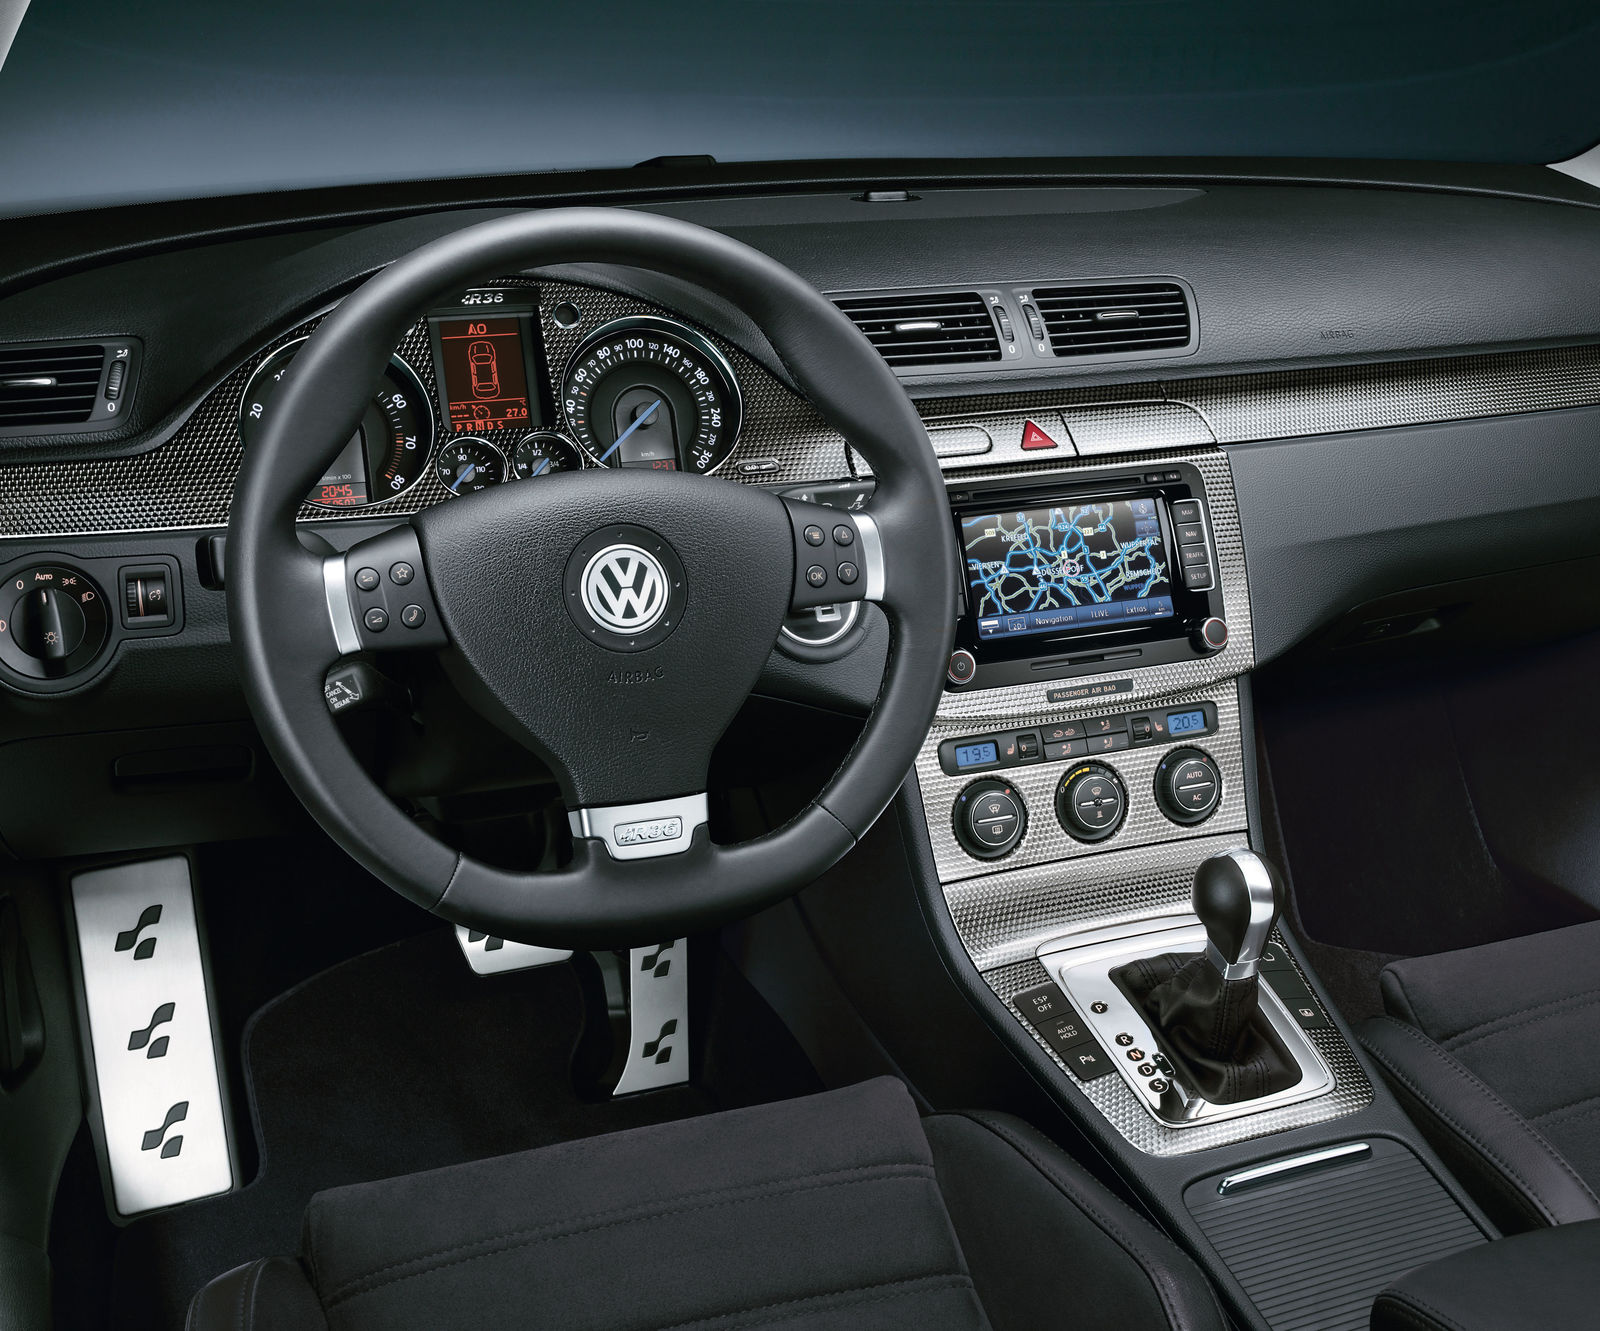 Пассат б6 драйв. Фольксваген Пассат b6 салон. B6 Фольксваген Пассат 2007. VW Passat b6 Interior. Volkswagen Passat b6 салон.